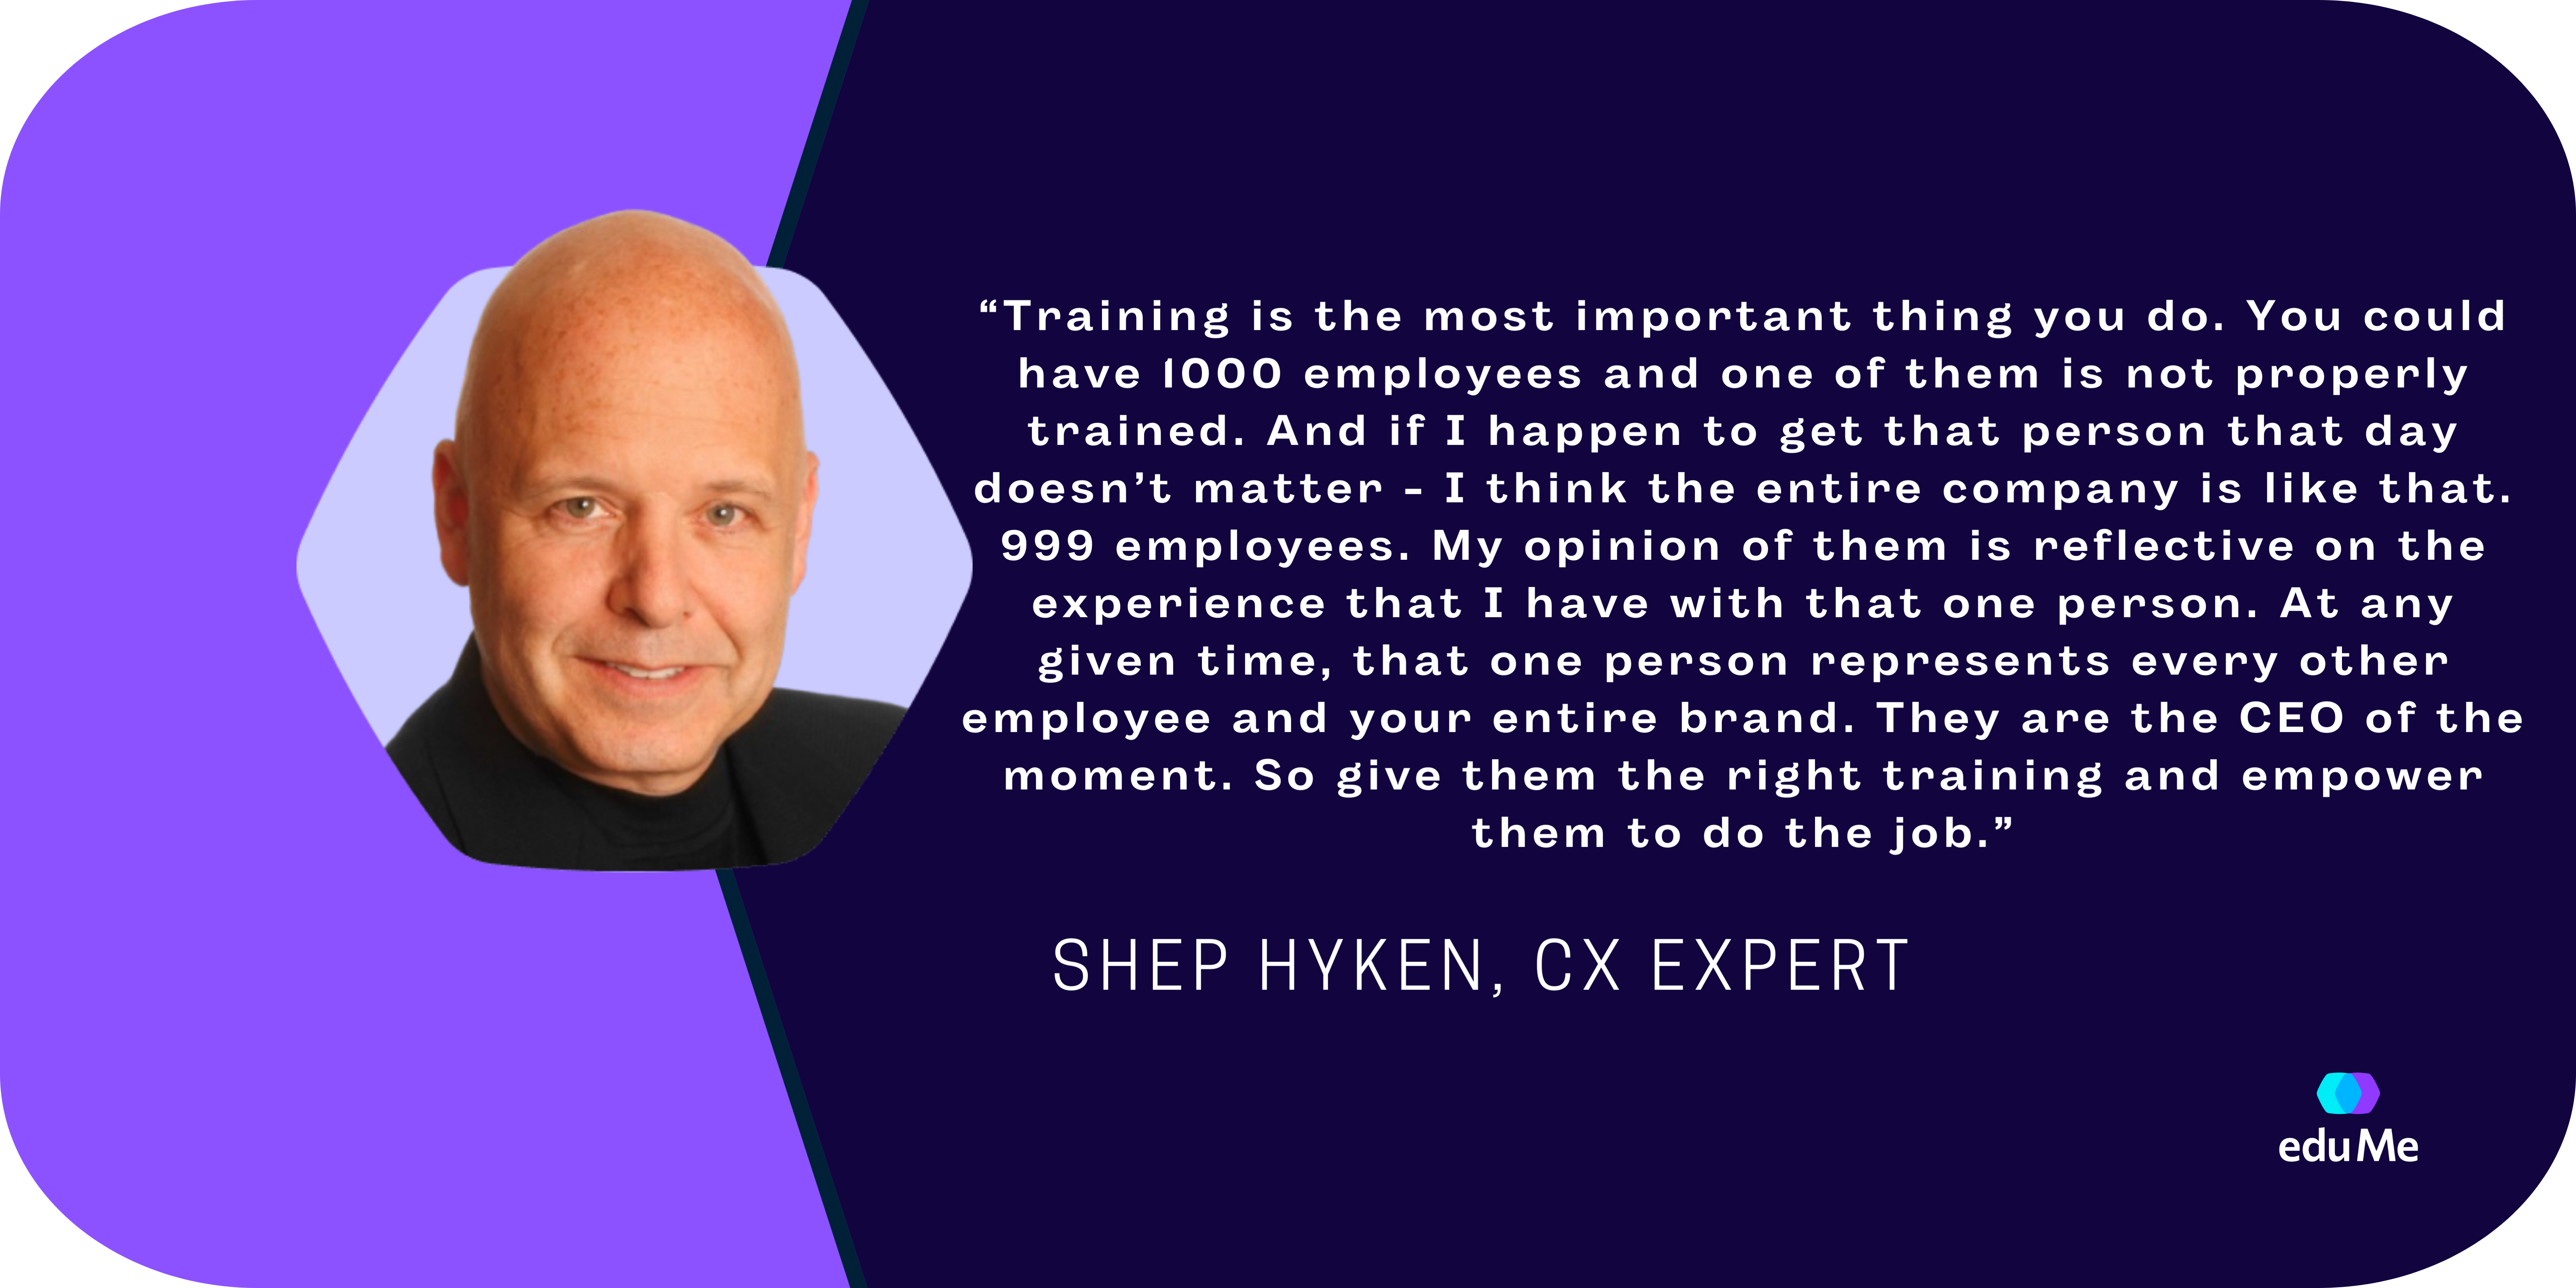 quote from CX expert Shep Hyken